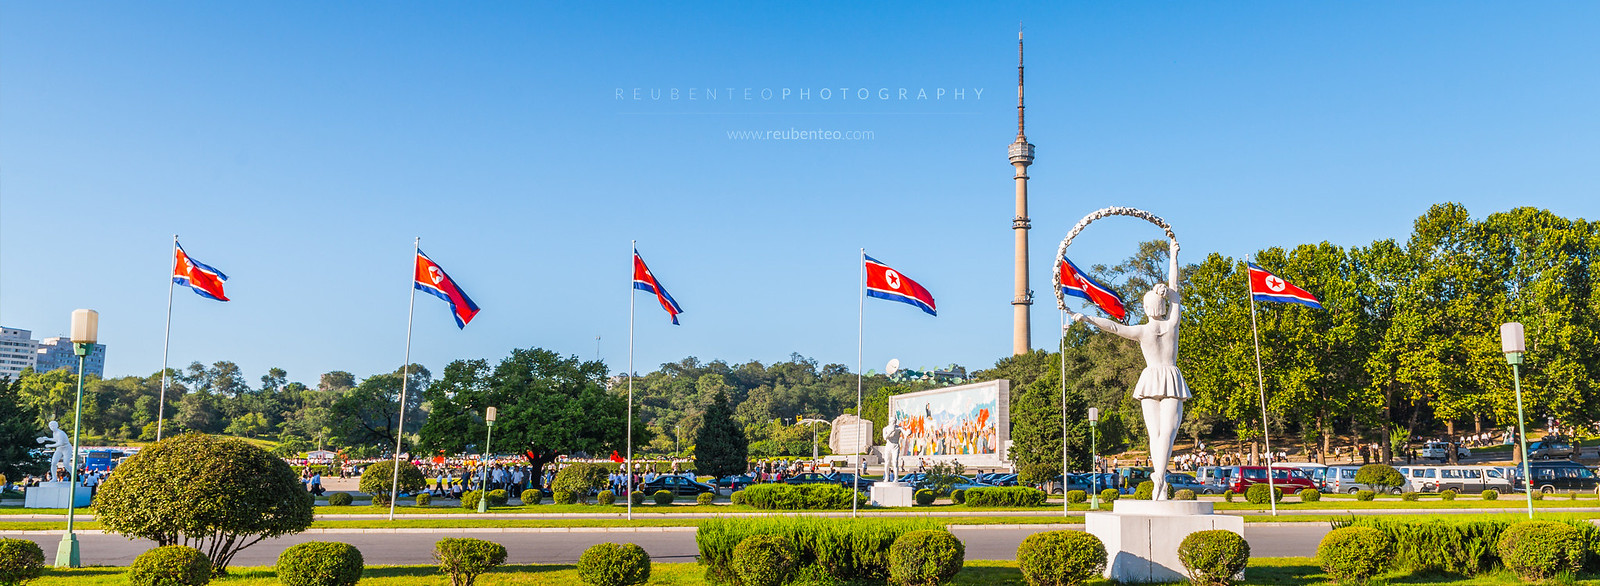 Pyongyang City